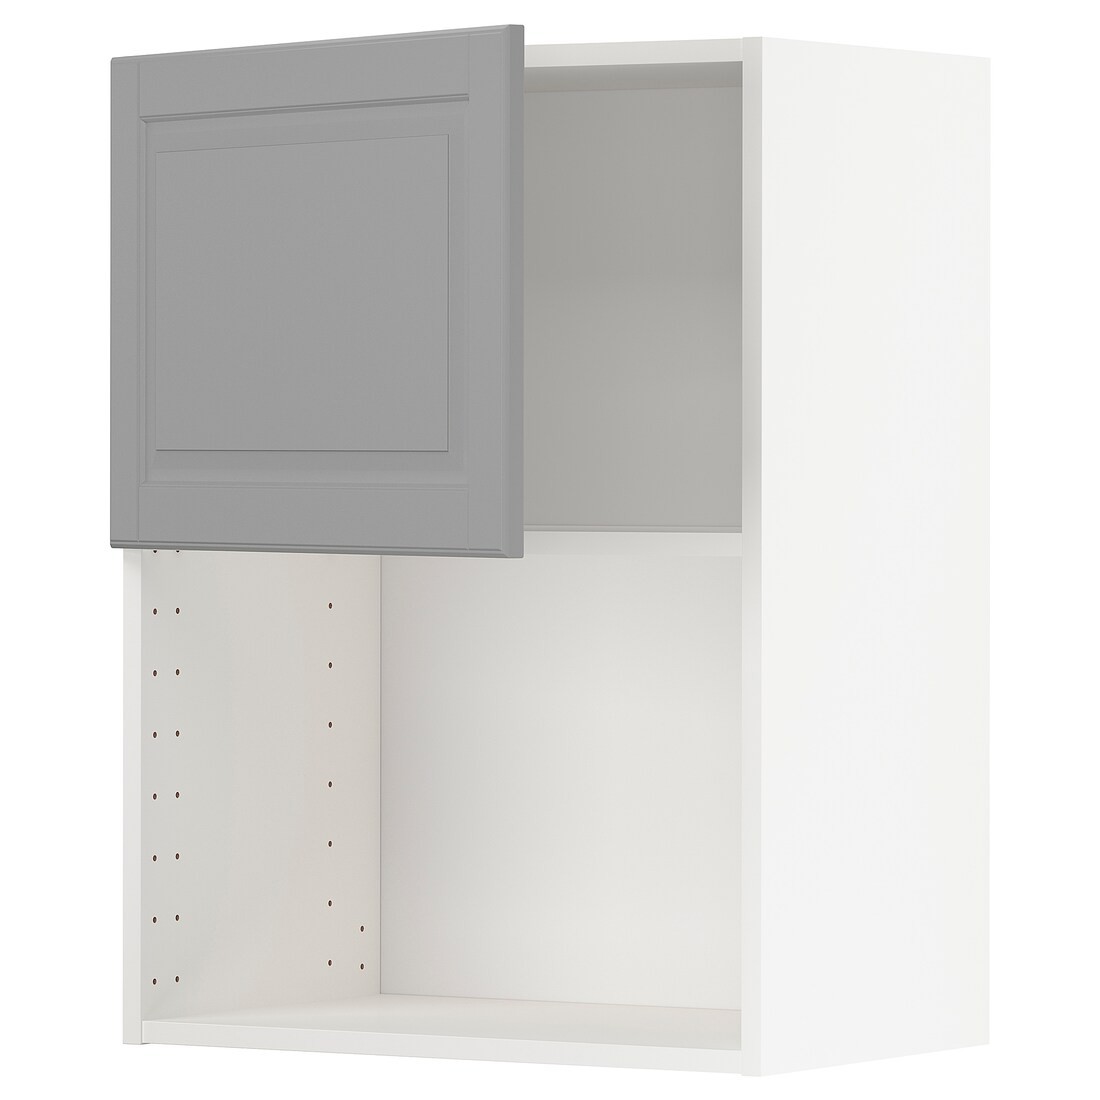 METOD МЕТОД Навесной шкаф для СВЧ-печи, белый / Bodbyn серый, 60x80 см